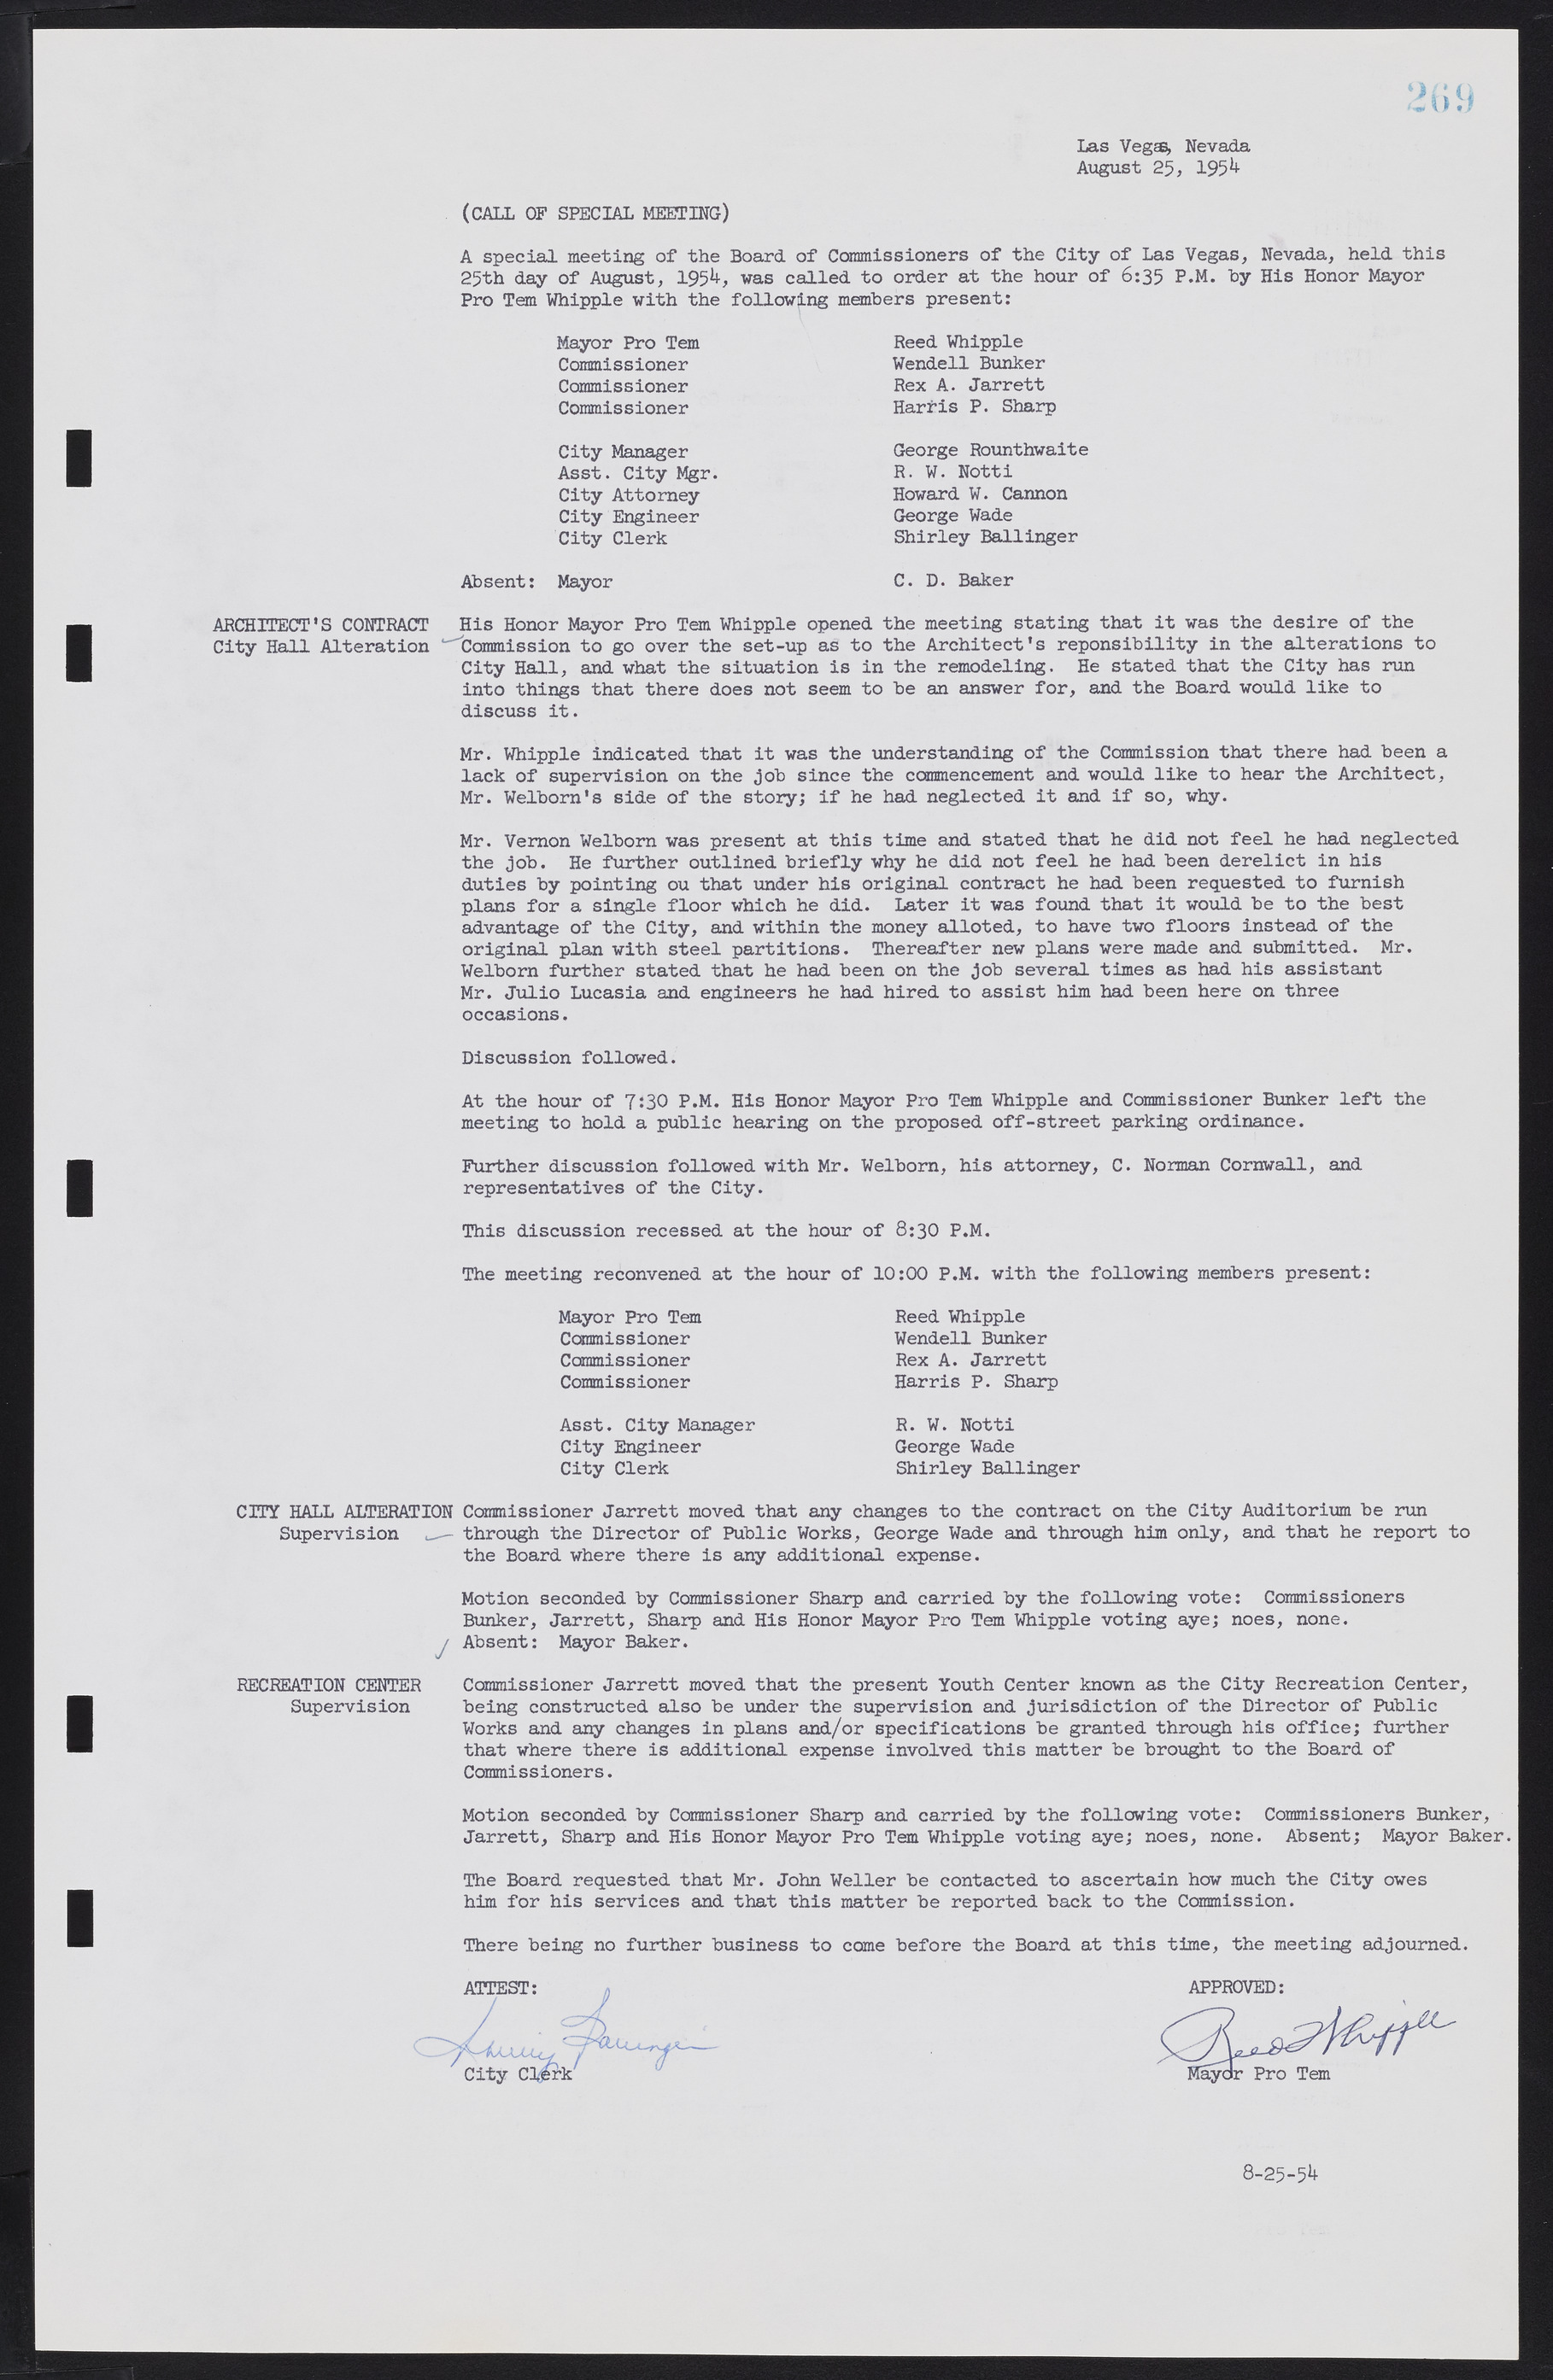 Las Vegas City Commission Minutes, February 17, 1954 to September 21, 1955, lvc000009-275